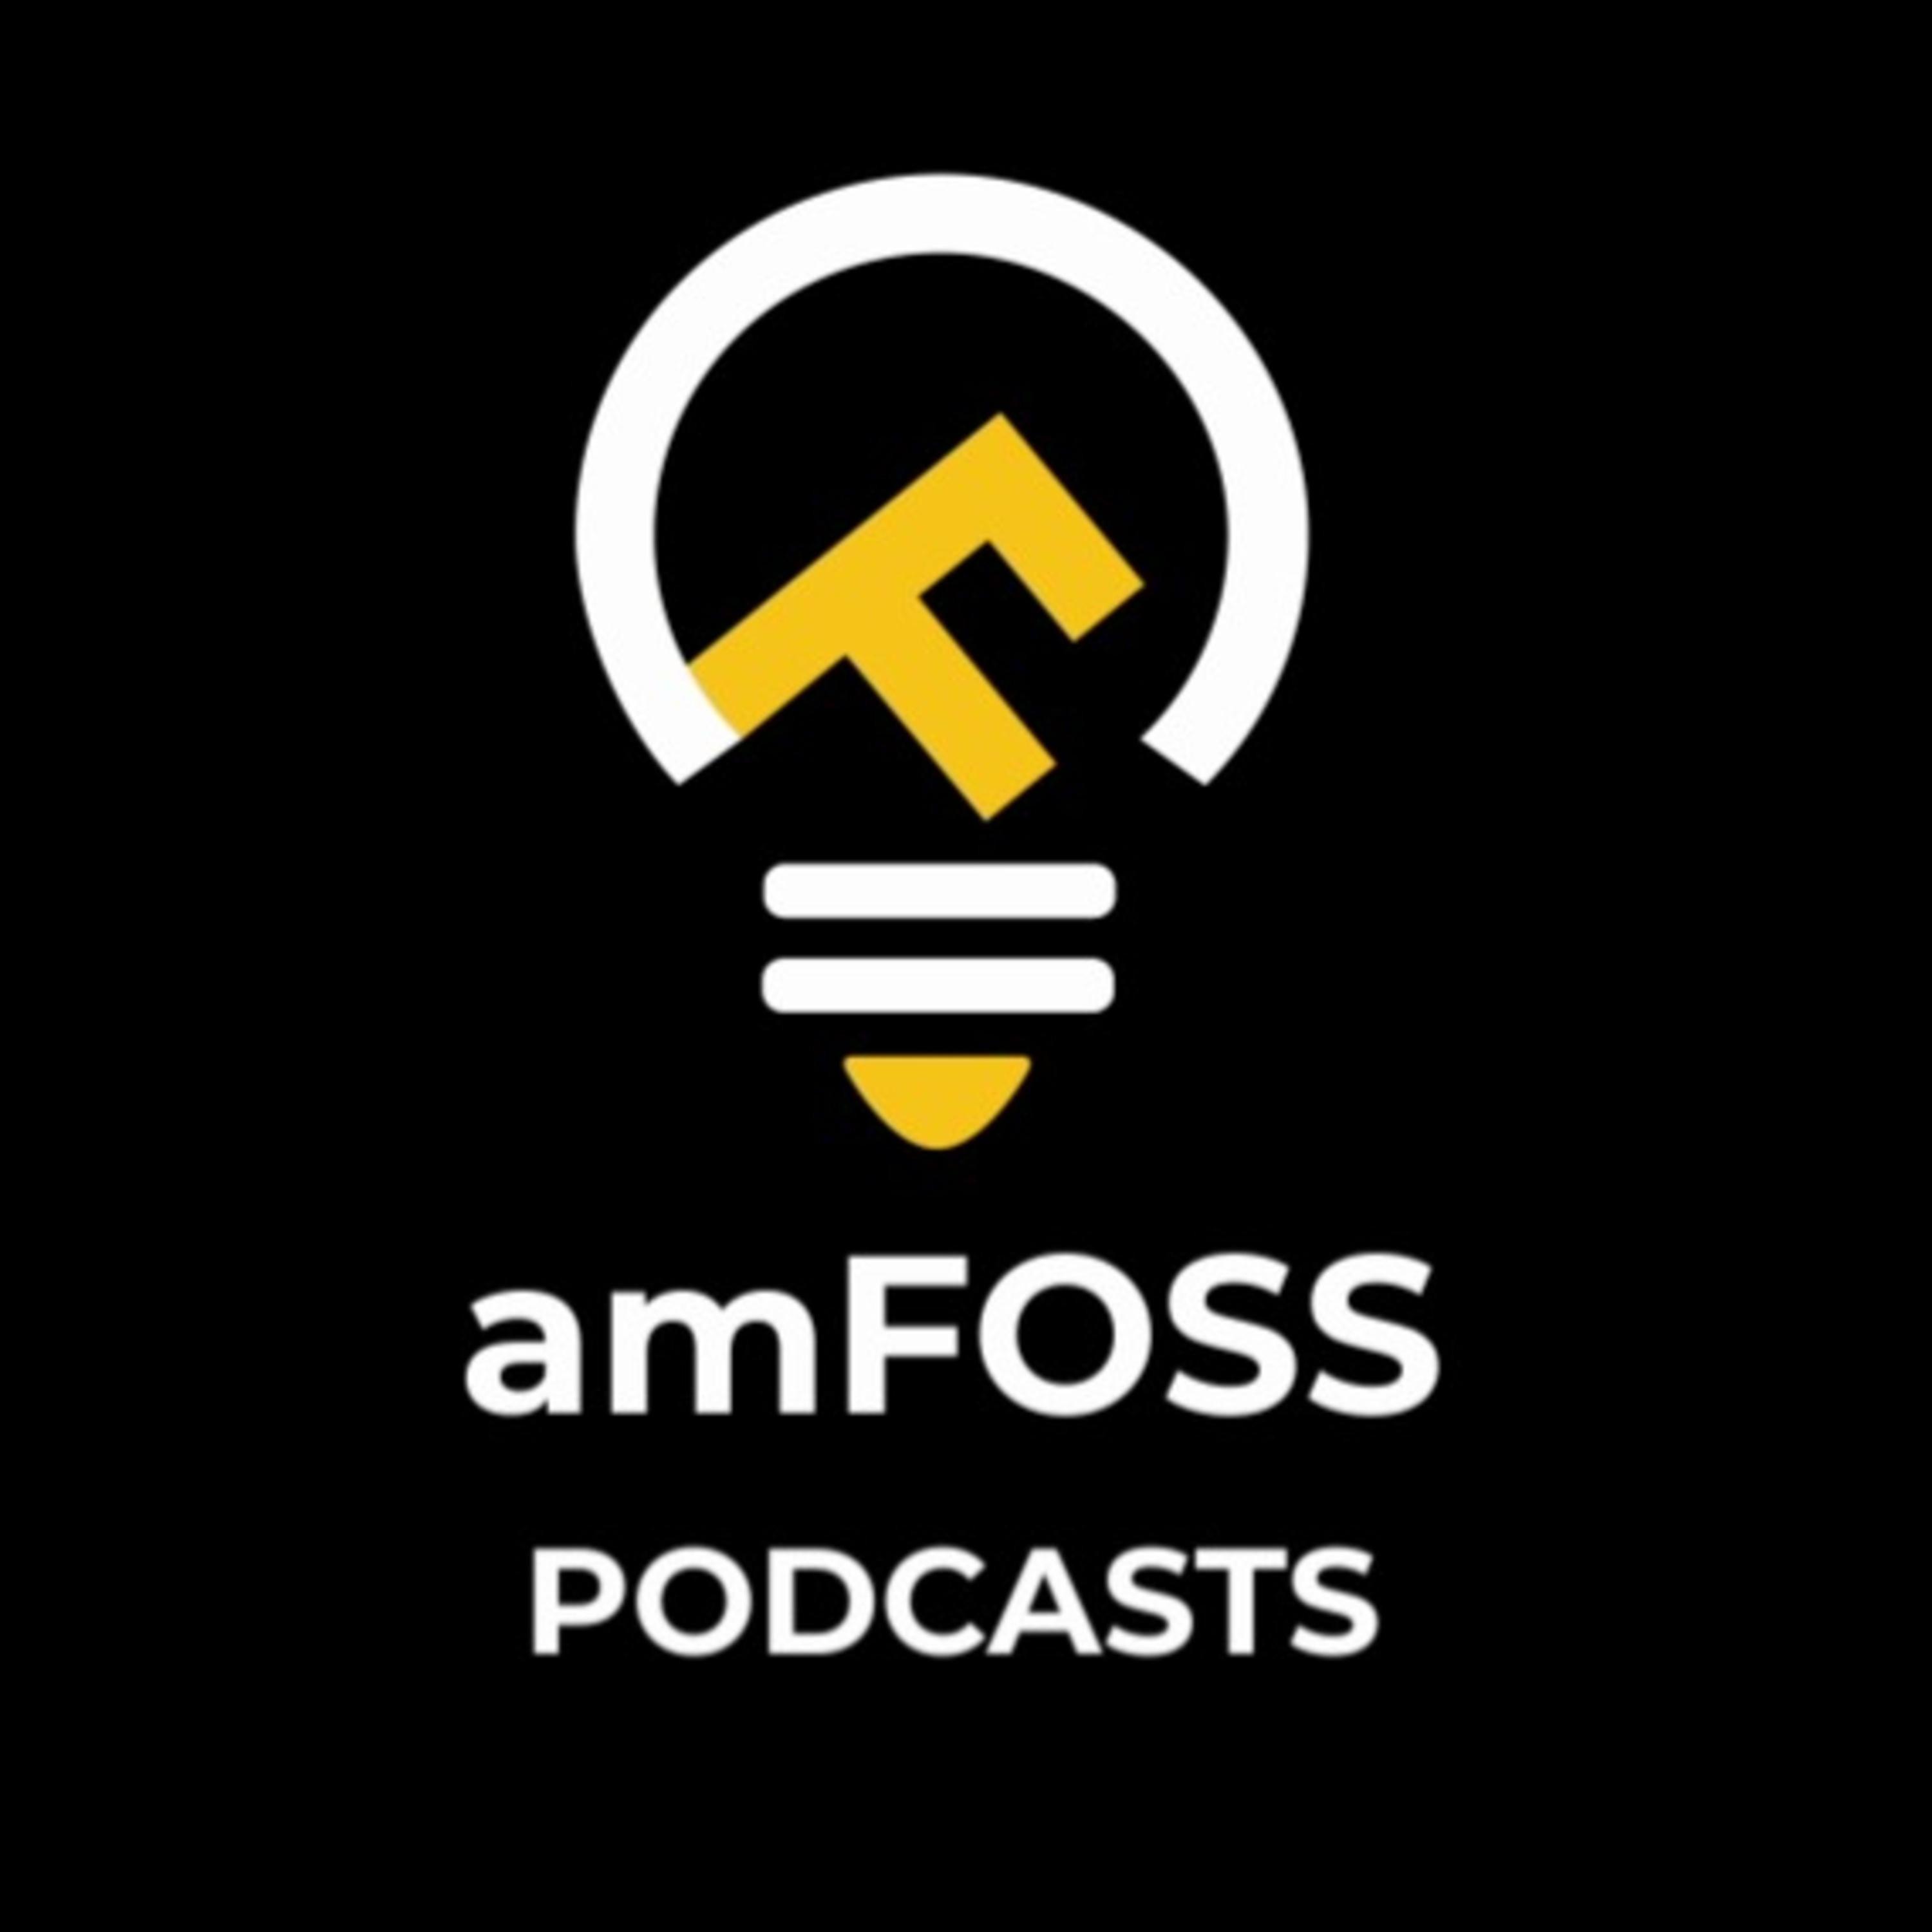 amFOSS Podcasts